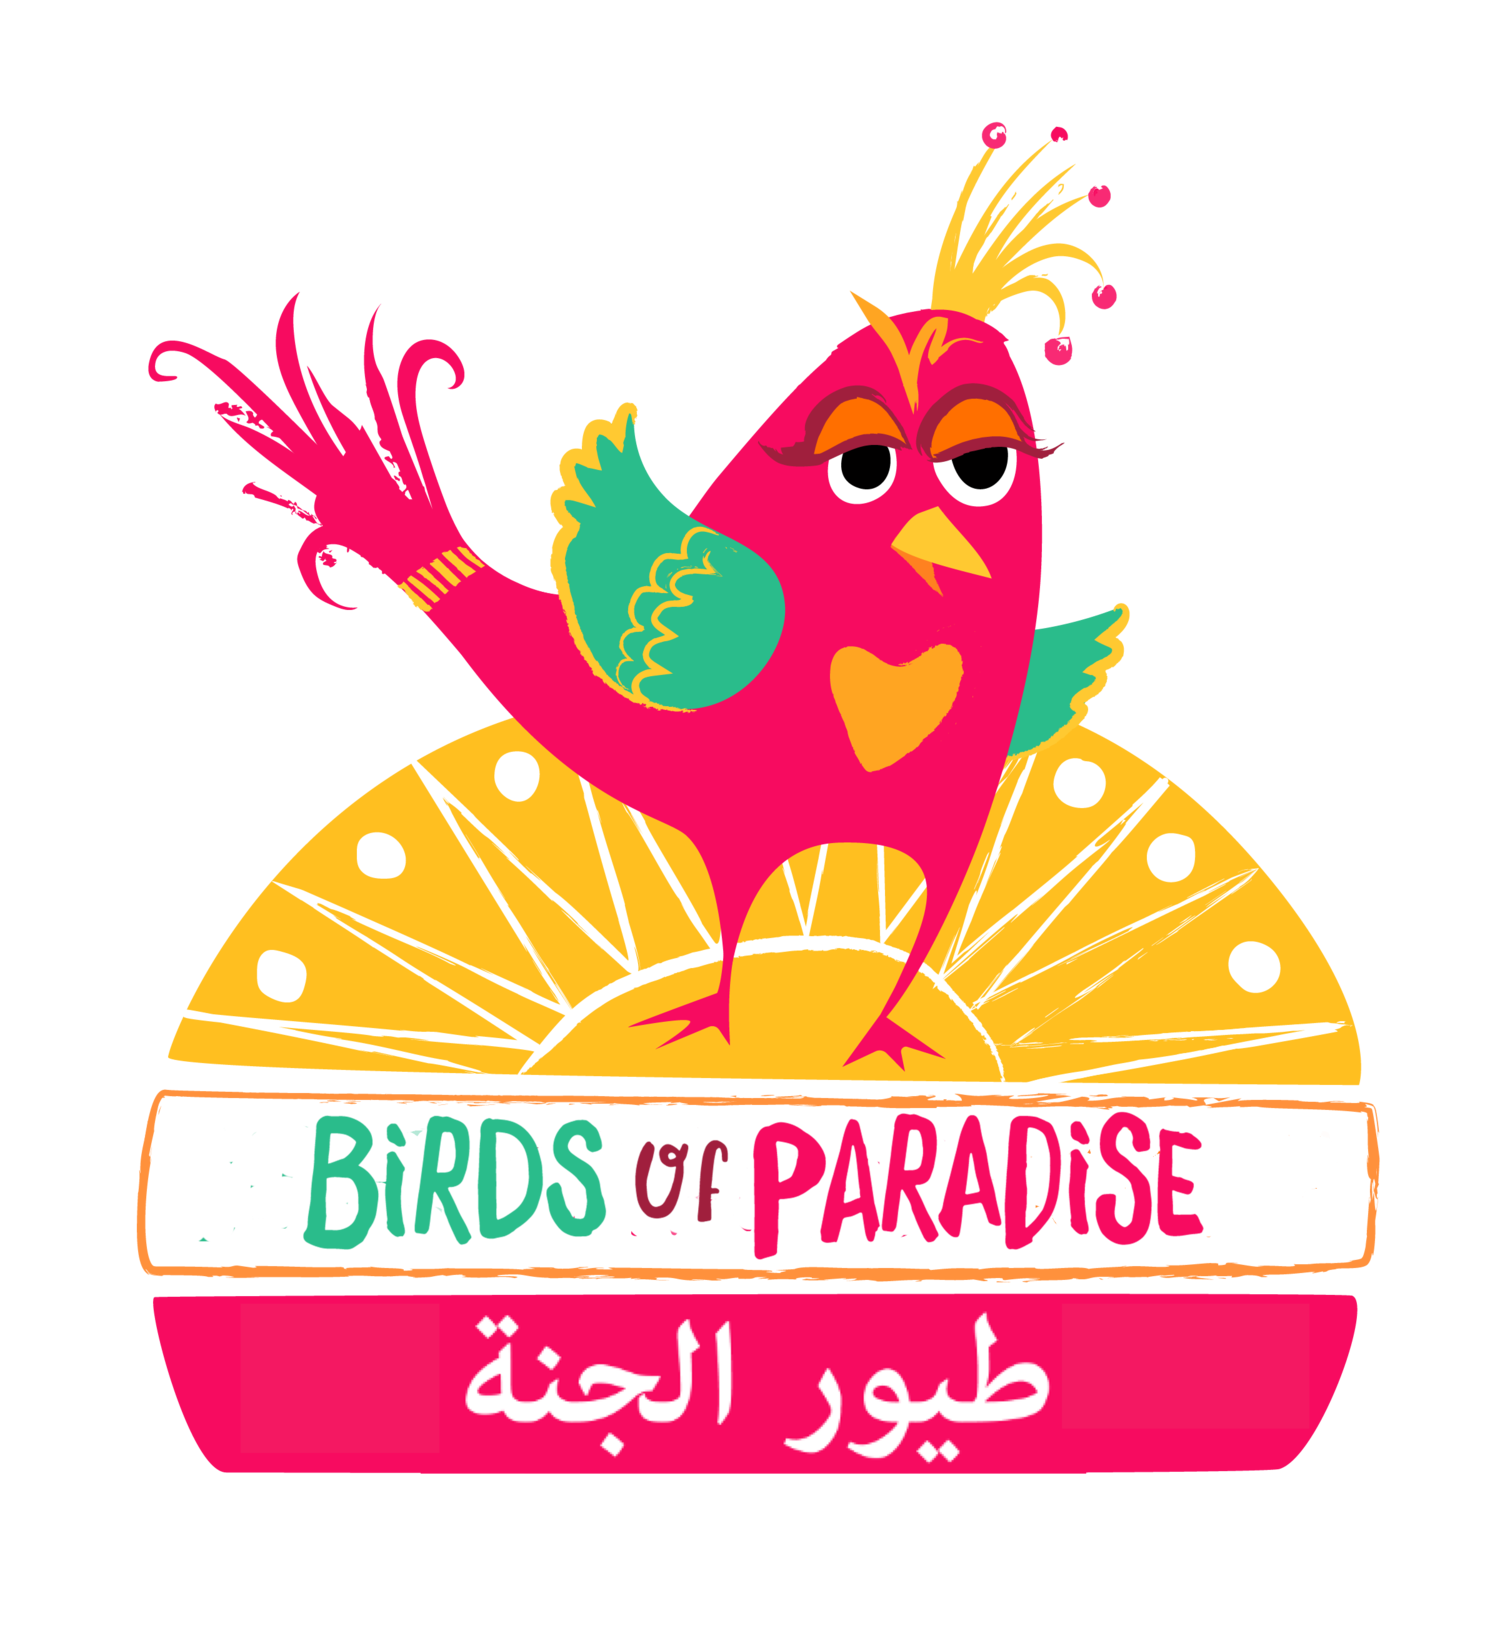 The Birds of Paradise, Dahab